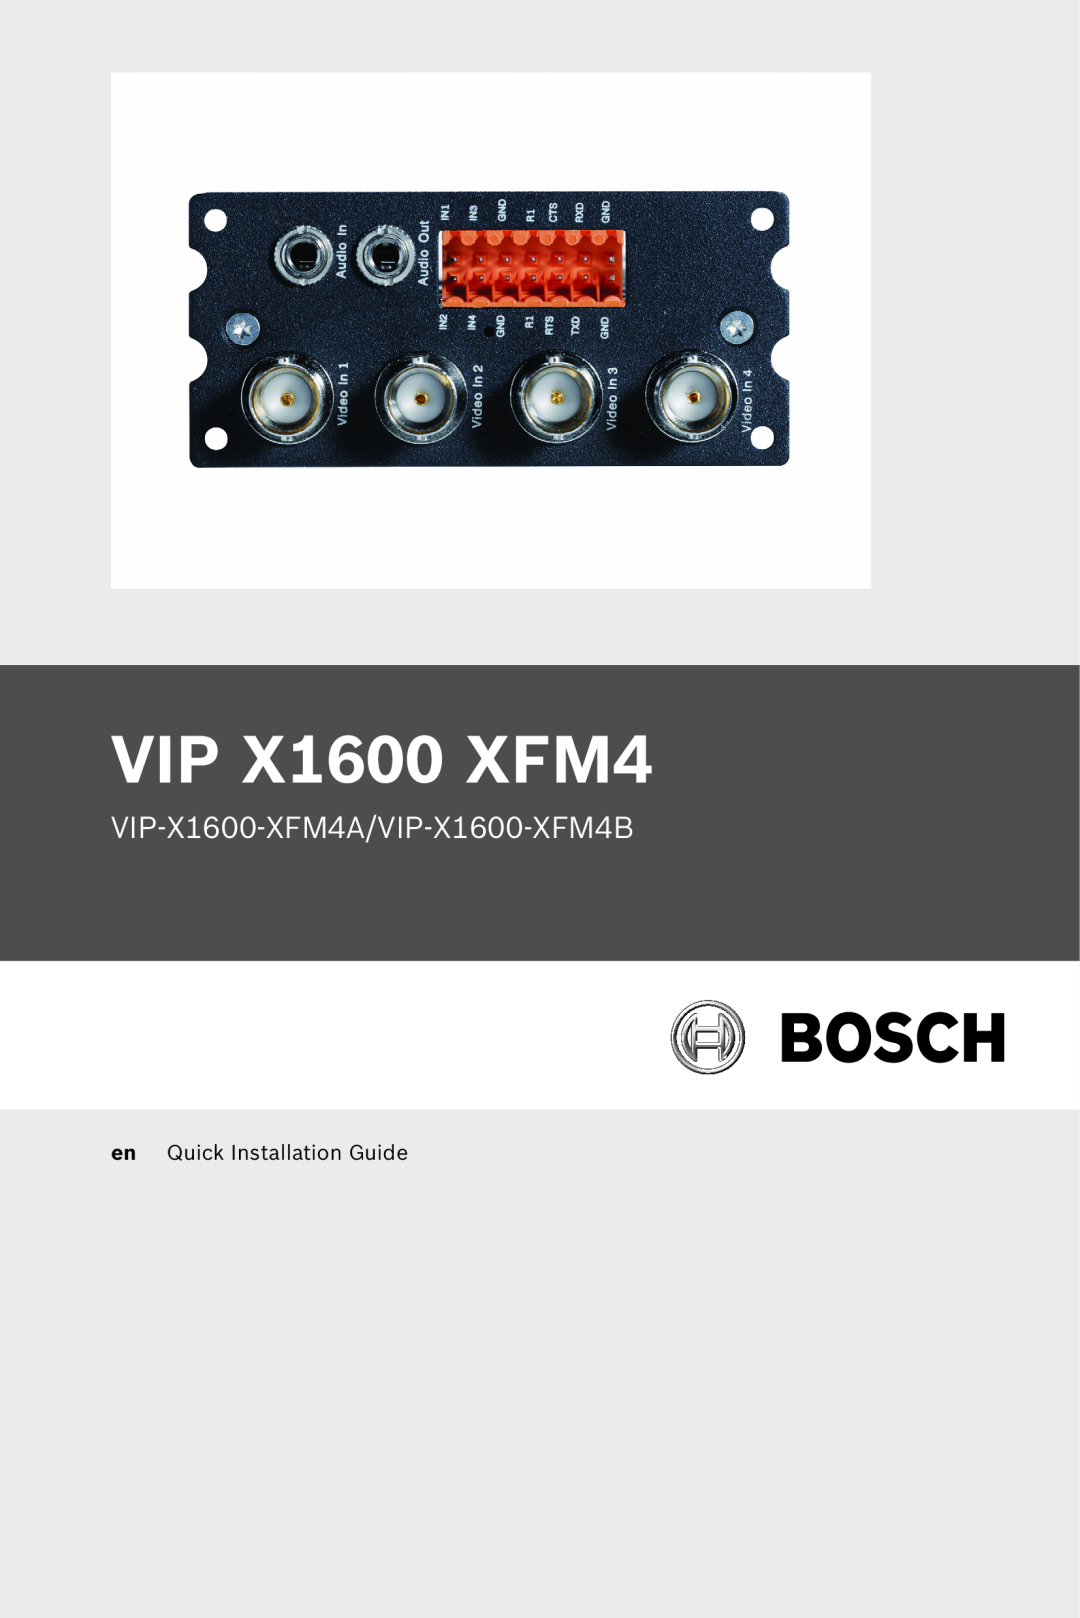 Bosch Appliances VIPX 1600X FM4 manual VIP X1600 XFM4, VIP-X1600-XFM4A/VIP-X1600-XFM4B, en Quick Installation Guide 